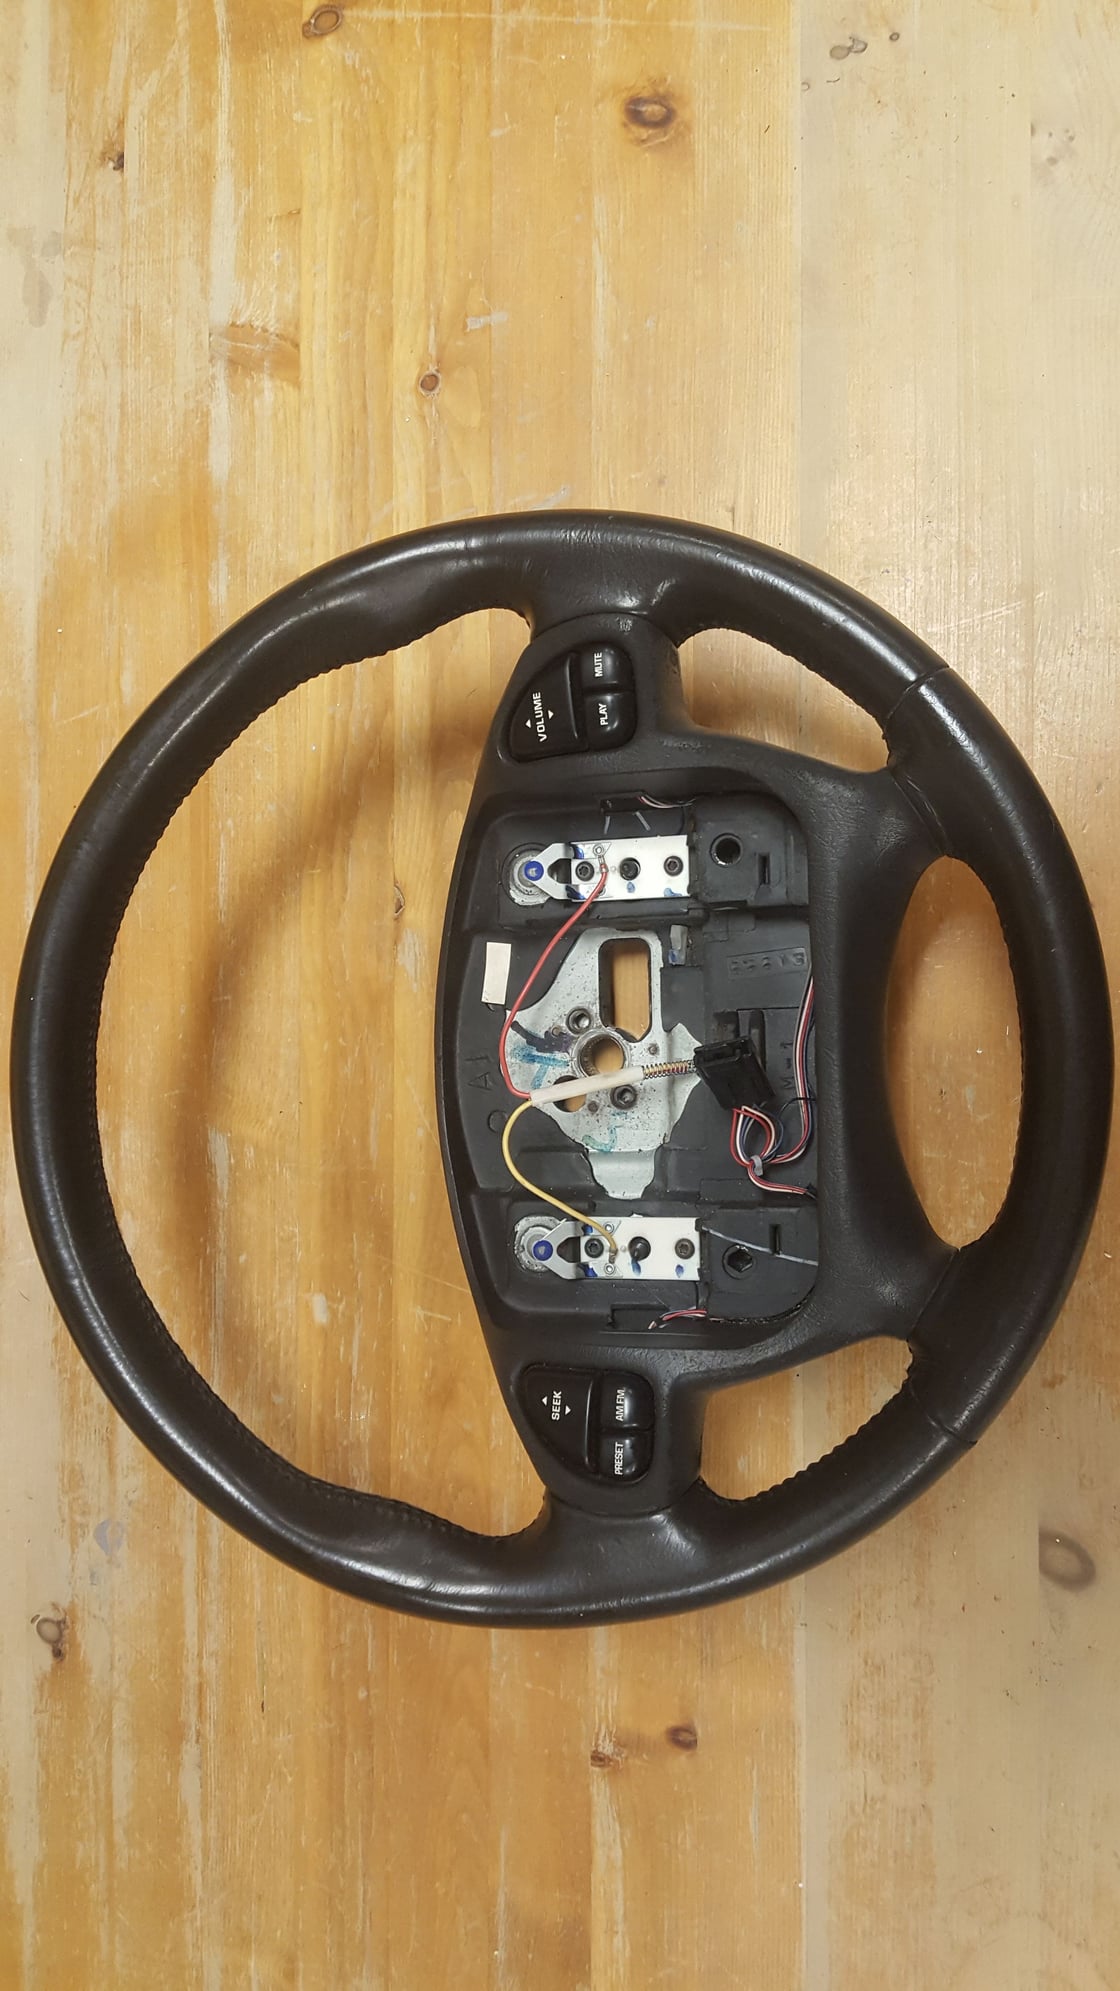  - 2000-02 Camaro Leather steering wheel w radio controls - Merritt Island, FL 32952, United States